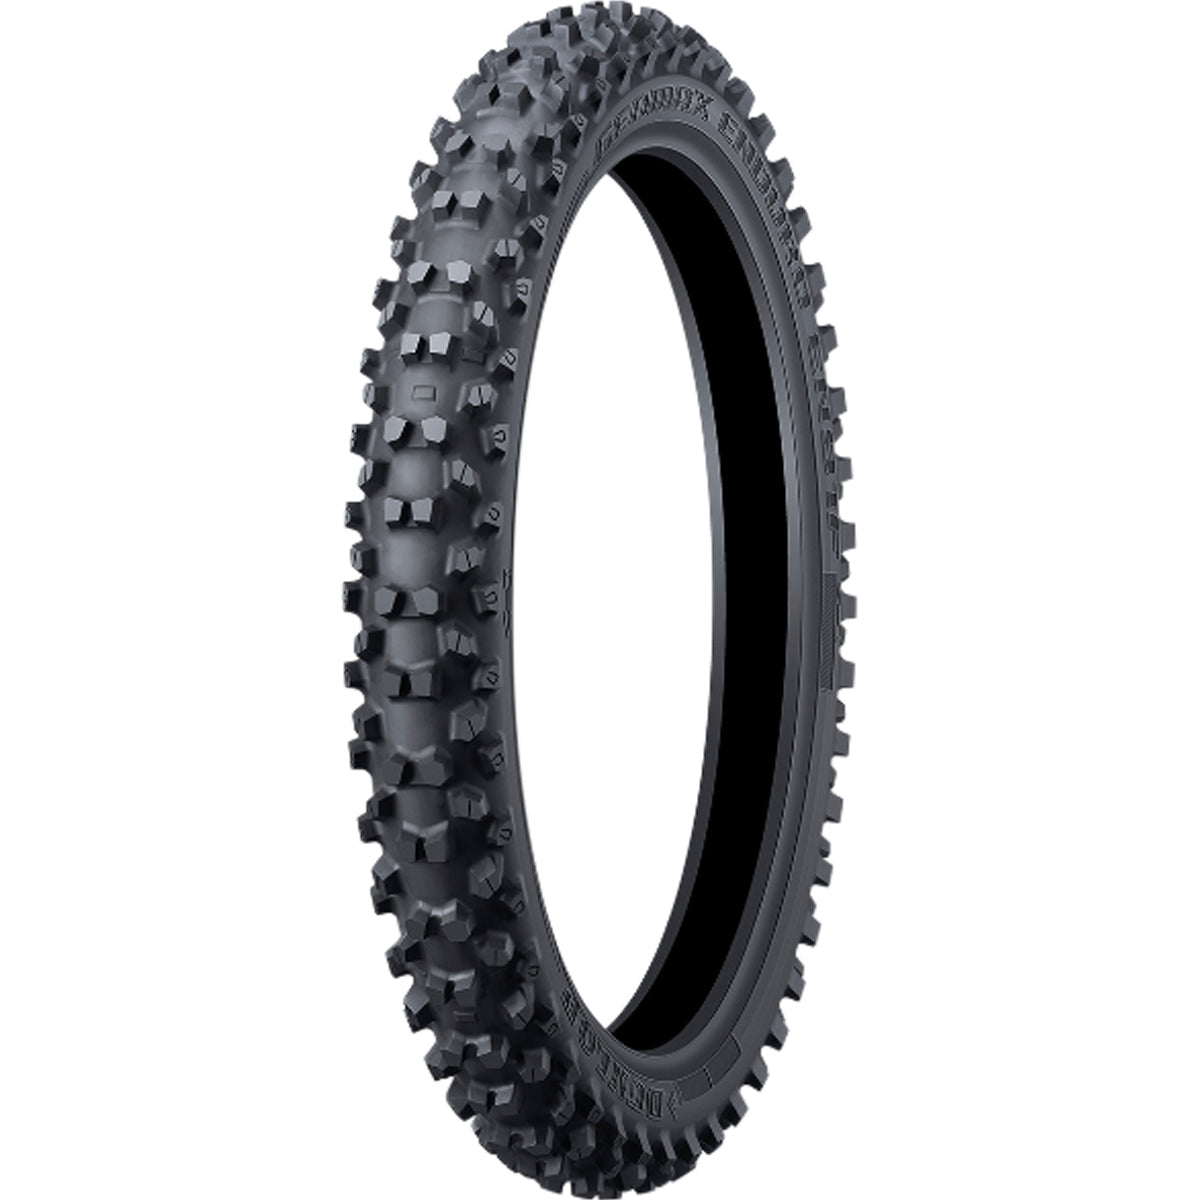 Dunlop Geomax Enduro EN91 21" Front Off-Road Tires-0312